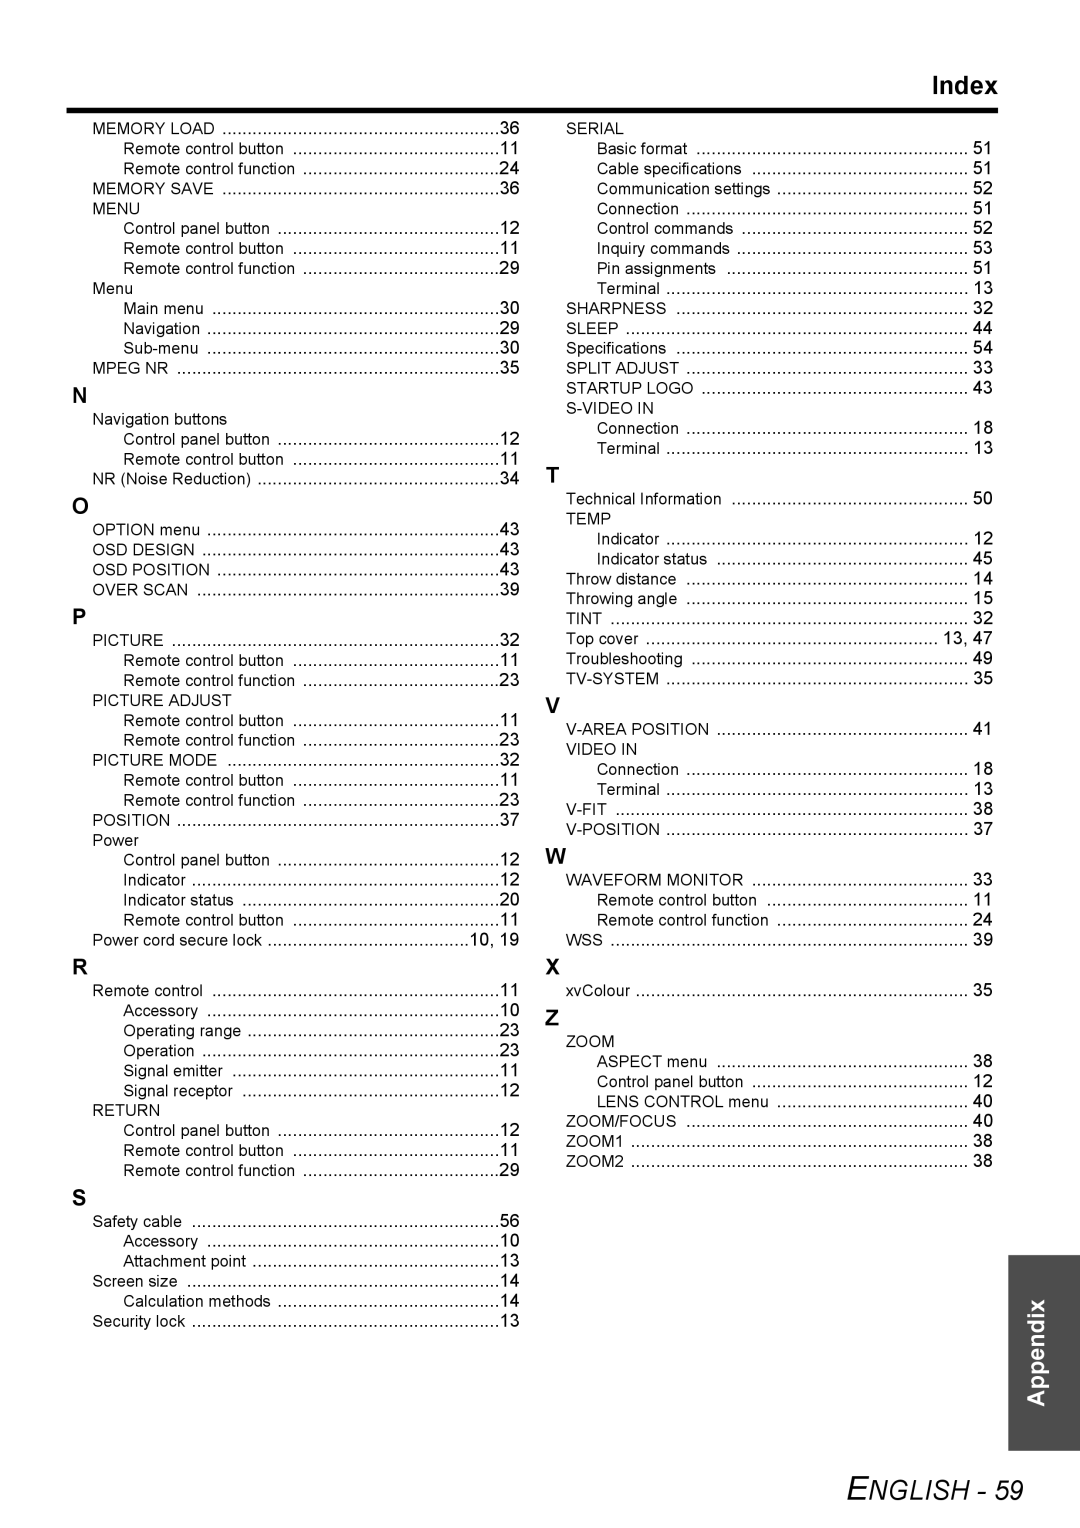 Panasonic PT-AE3000E manual Index, English, Appendix 